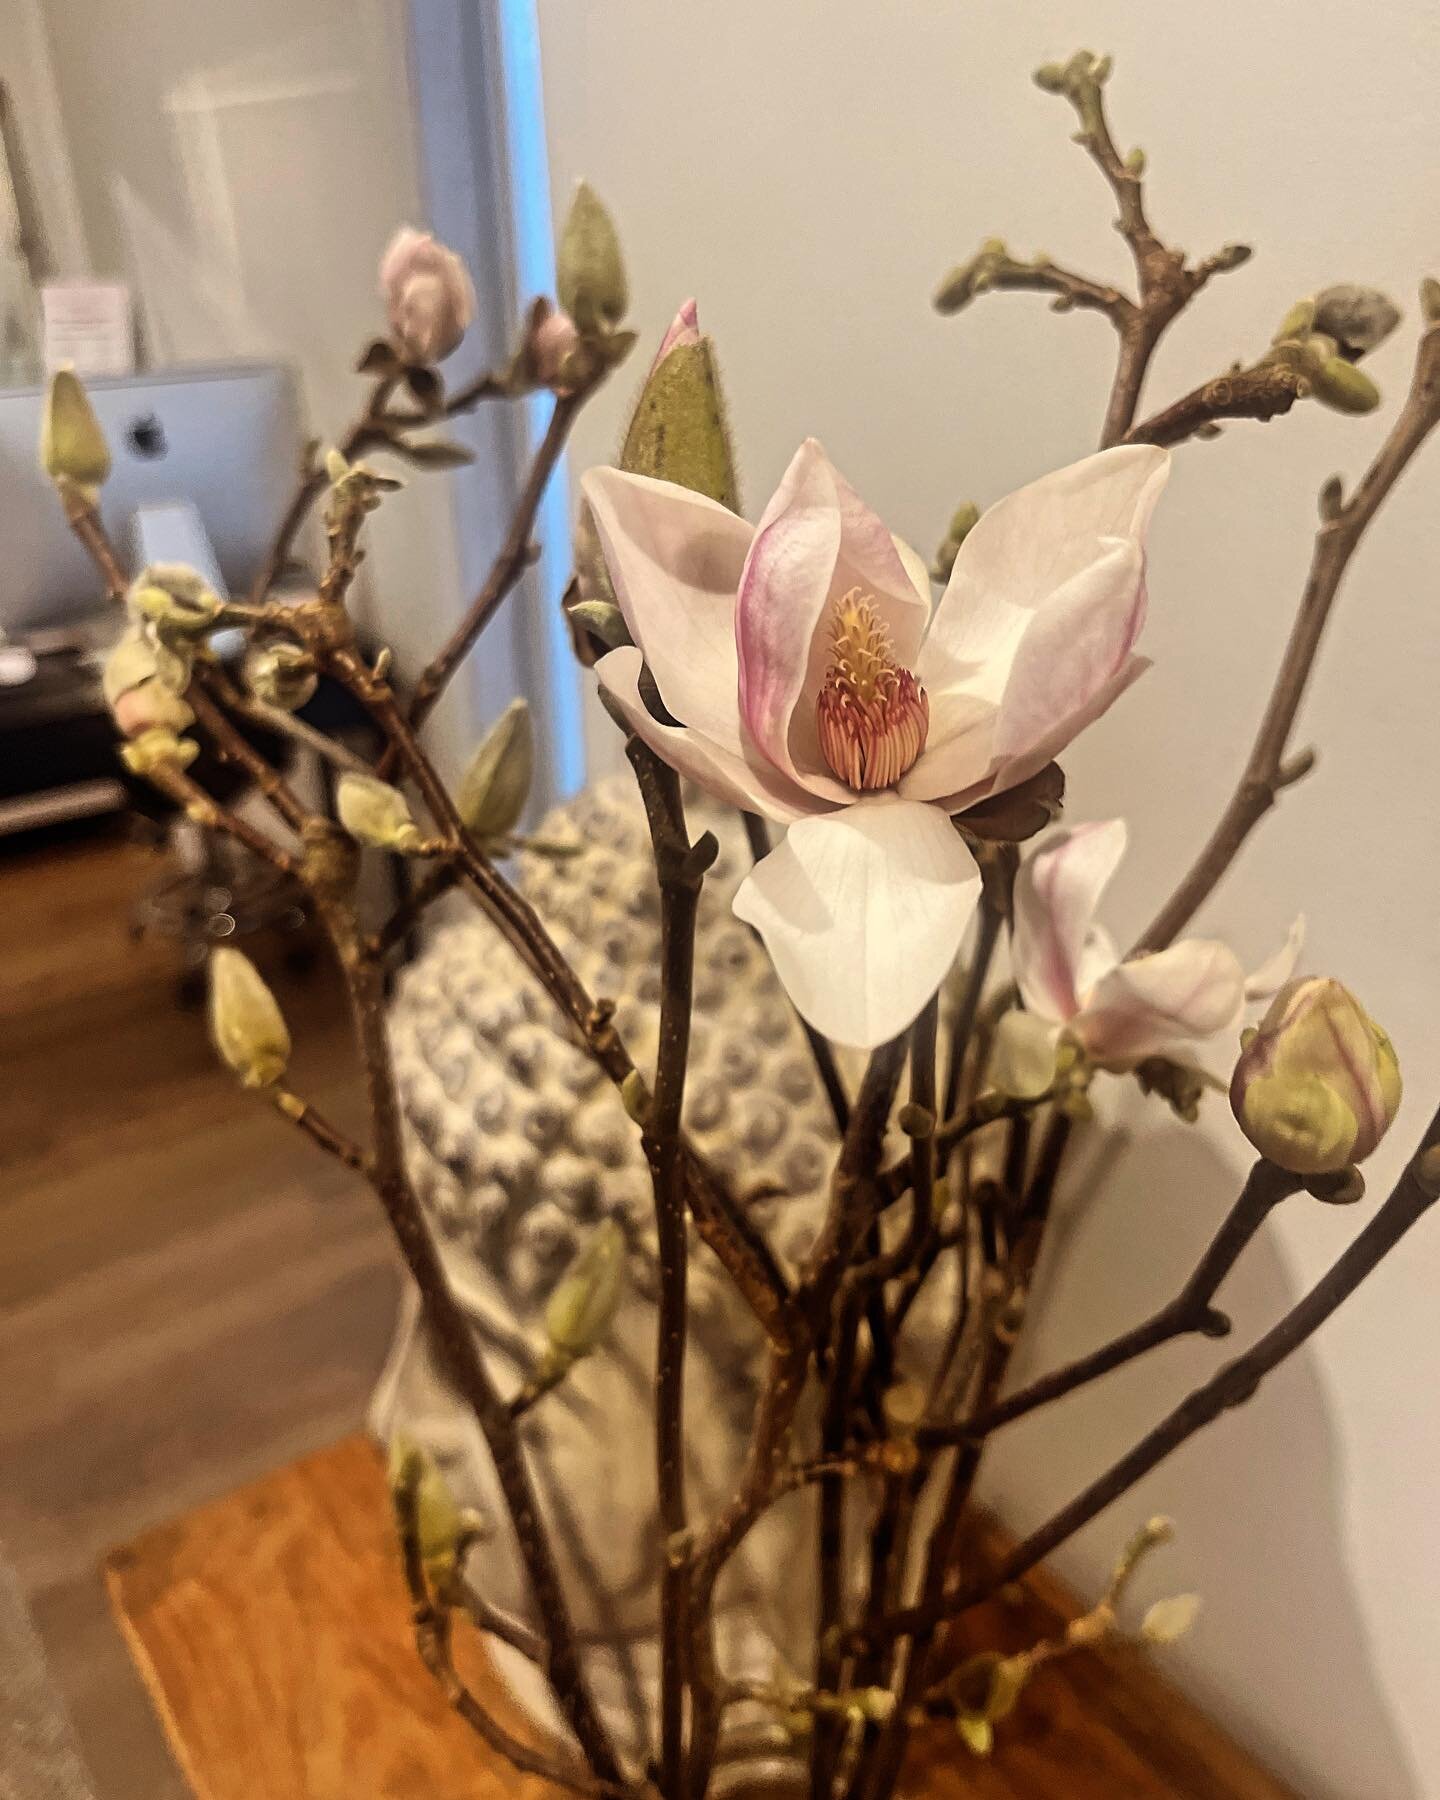 Sweet magnolias 🥰 Kev&auml;t tulee hiljalleen! Tervetuloa her&auml;ttelem&auml;&auml;n kehoa.

www.hellome.fi 

#jooga #pilates #barre #helsinki #hieronta #osteopatia #shiatsu #rosenmetodi